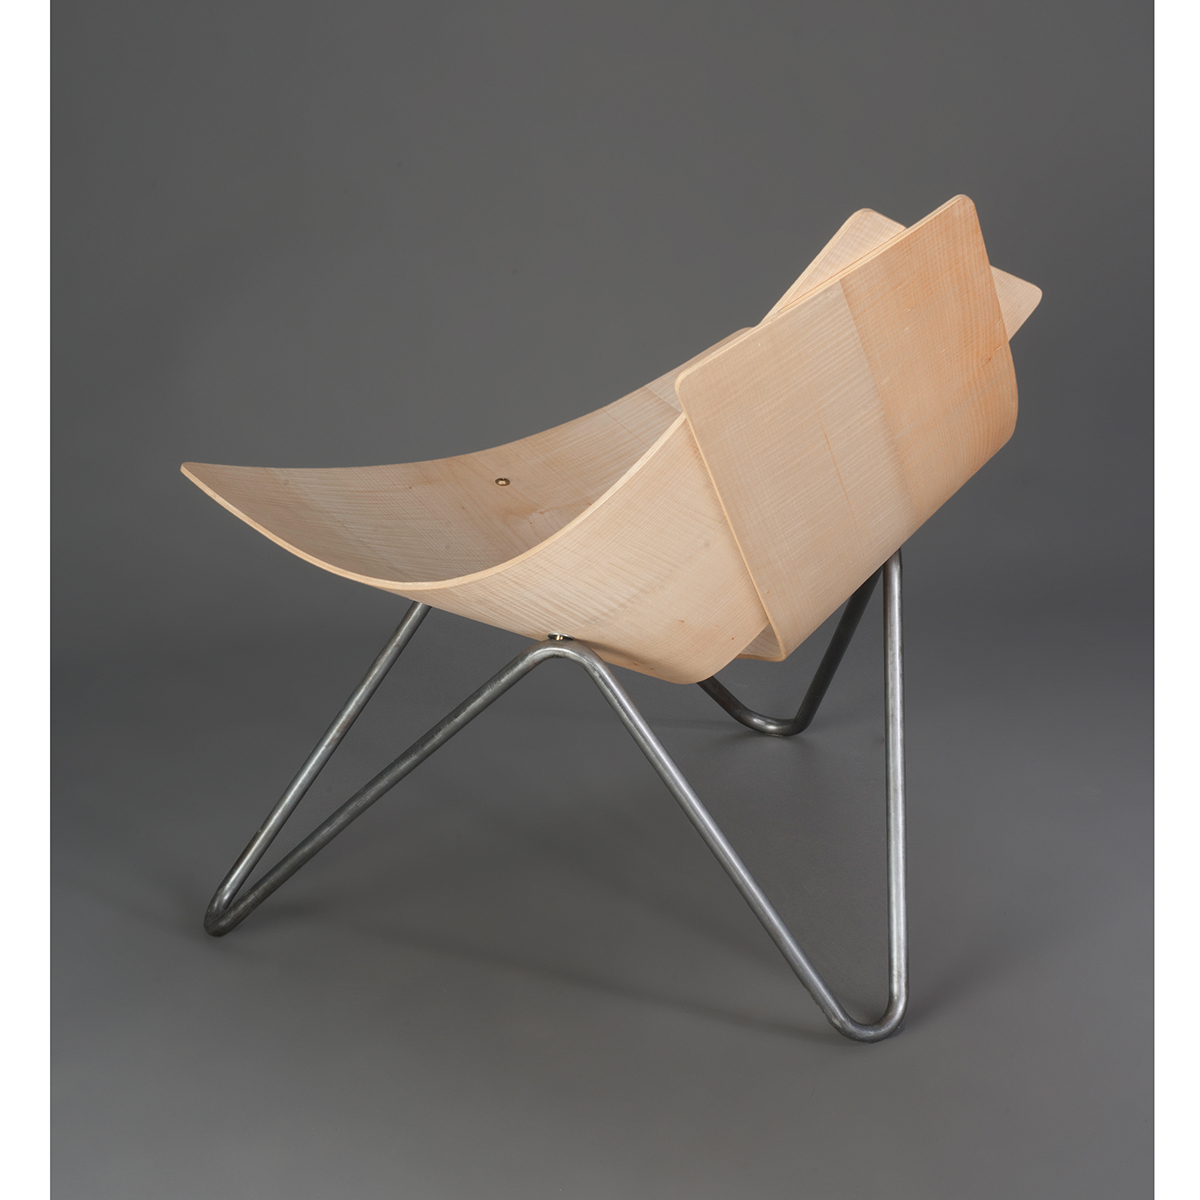 DIS Pratt Institute pratt design chair furniture